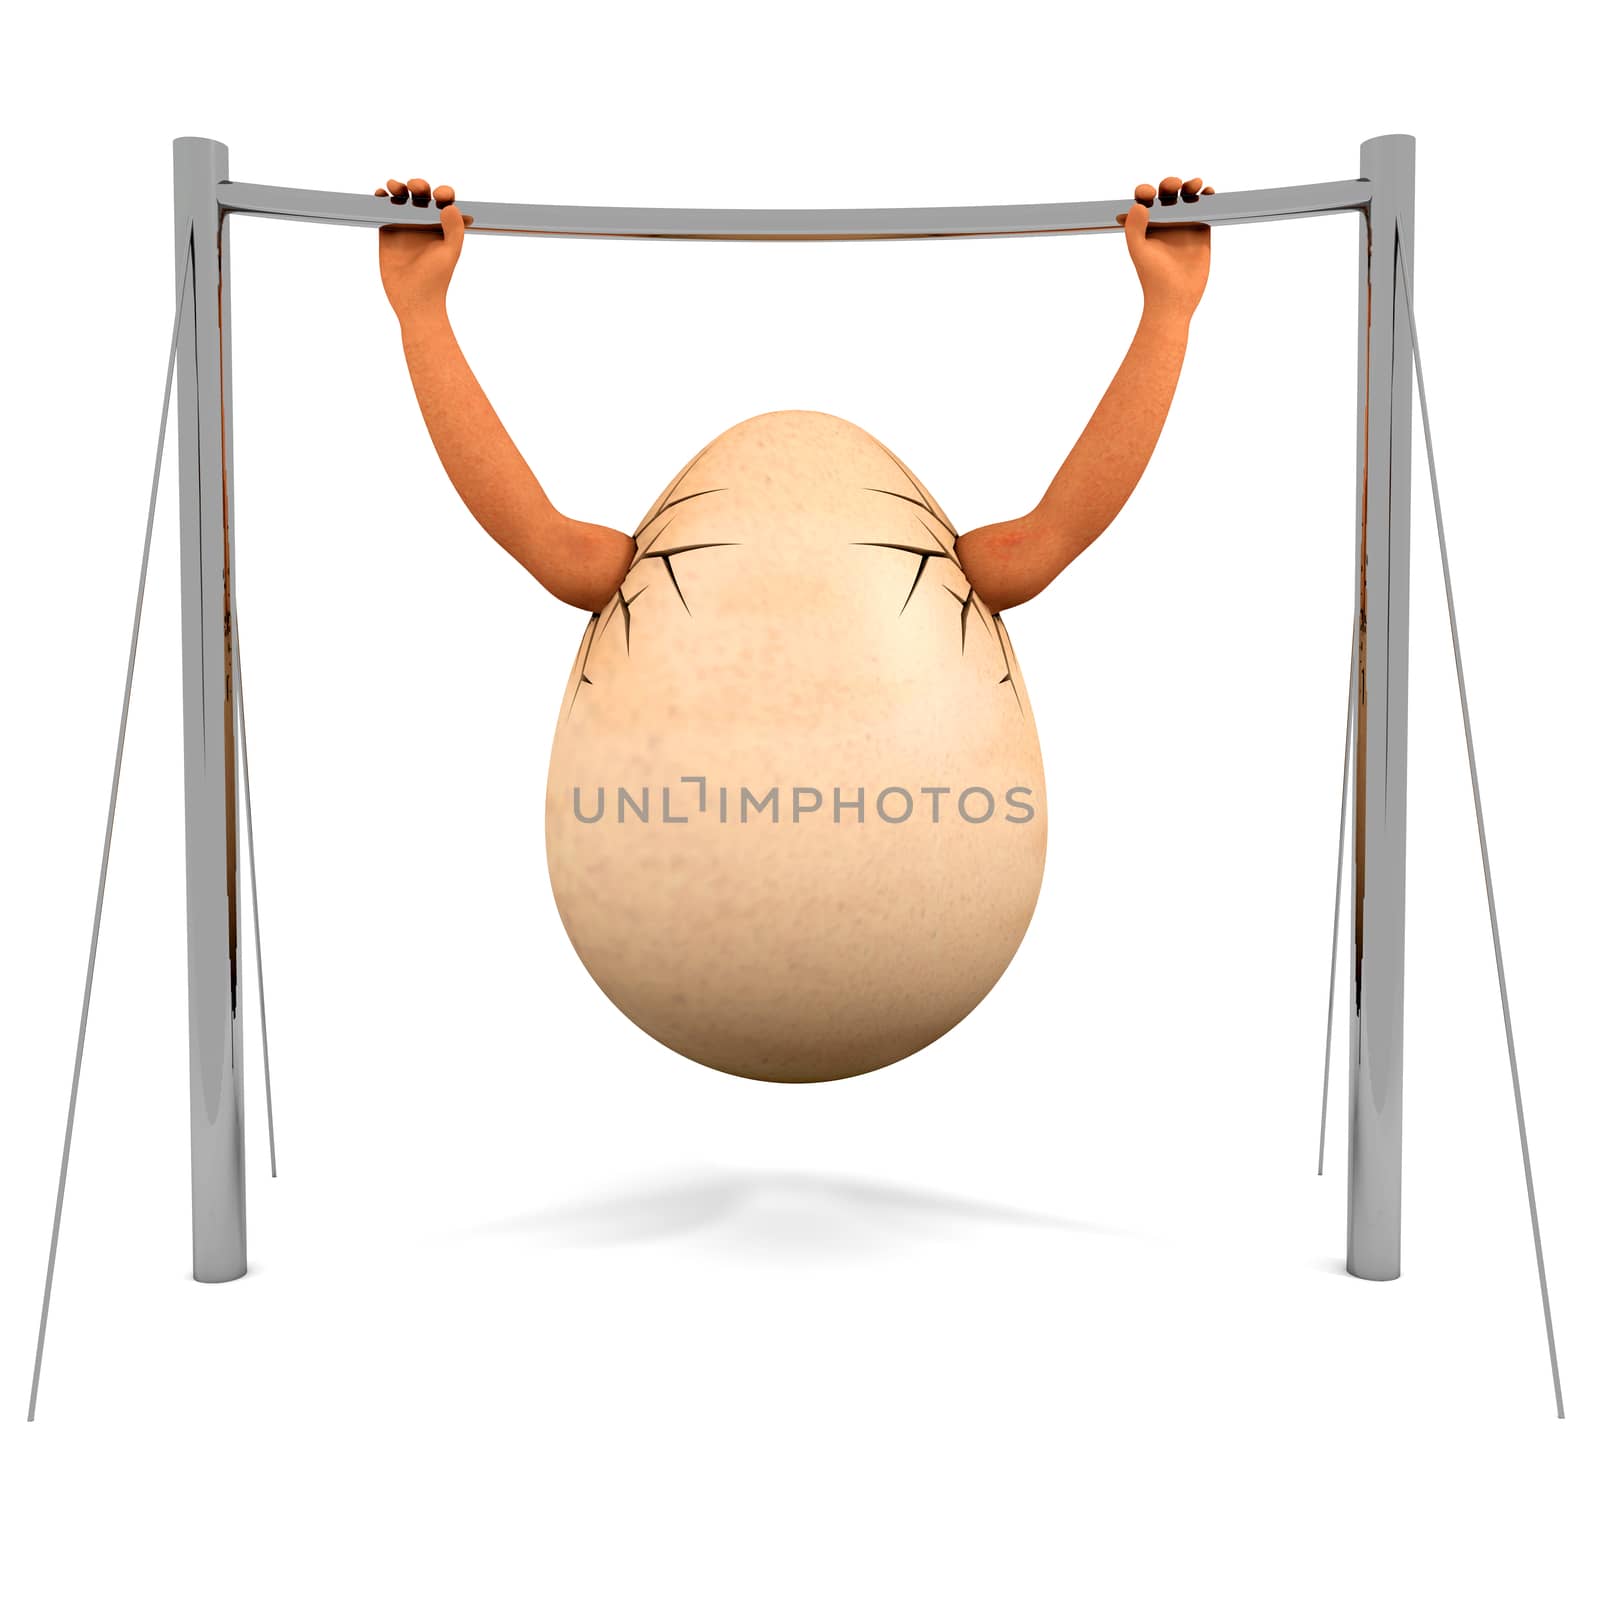 Chinning egg, gymnastics sport. Illustration on the white background.